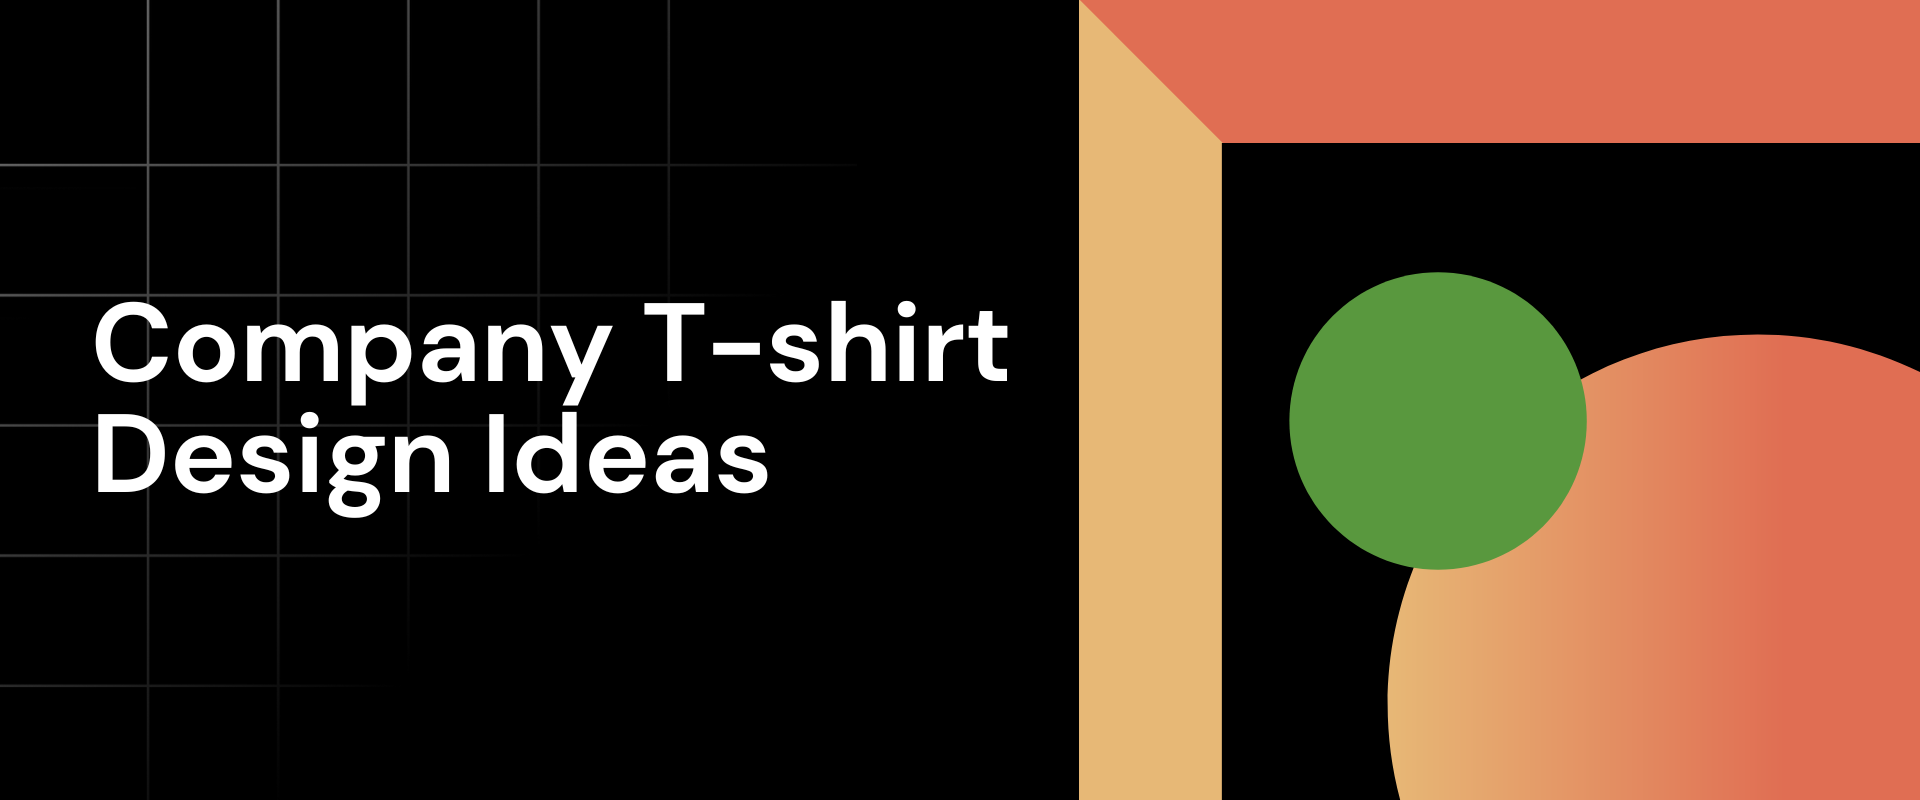 Company T-shirt Design Ideas